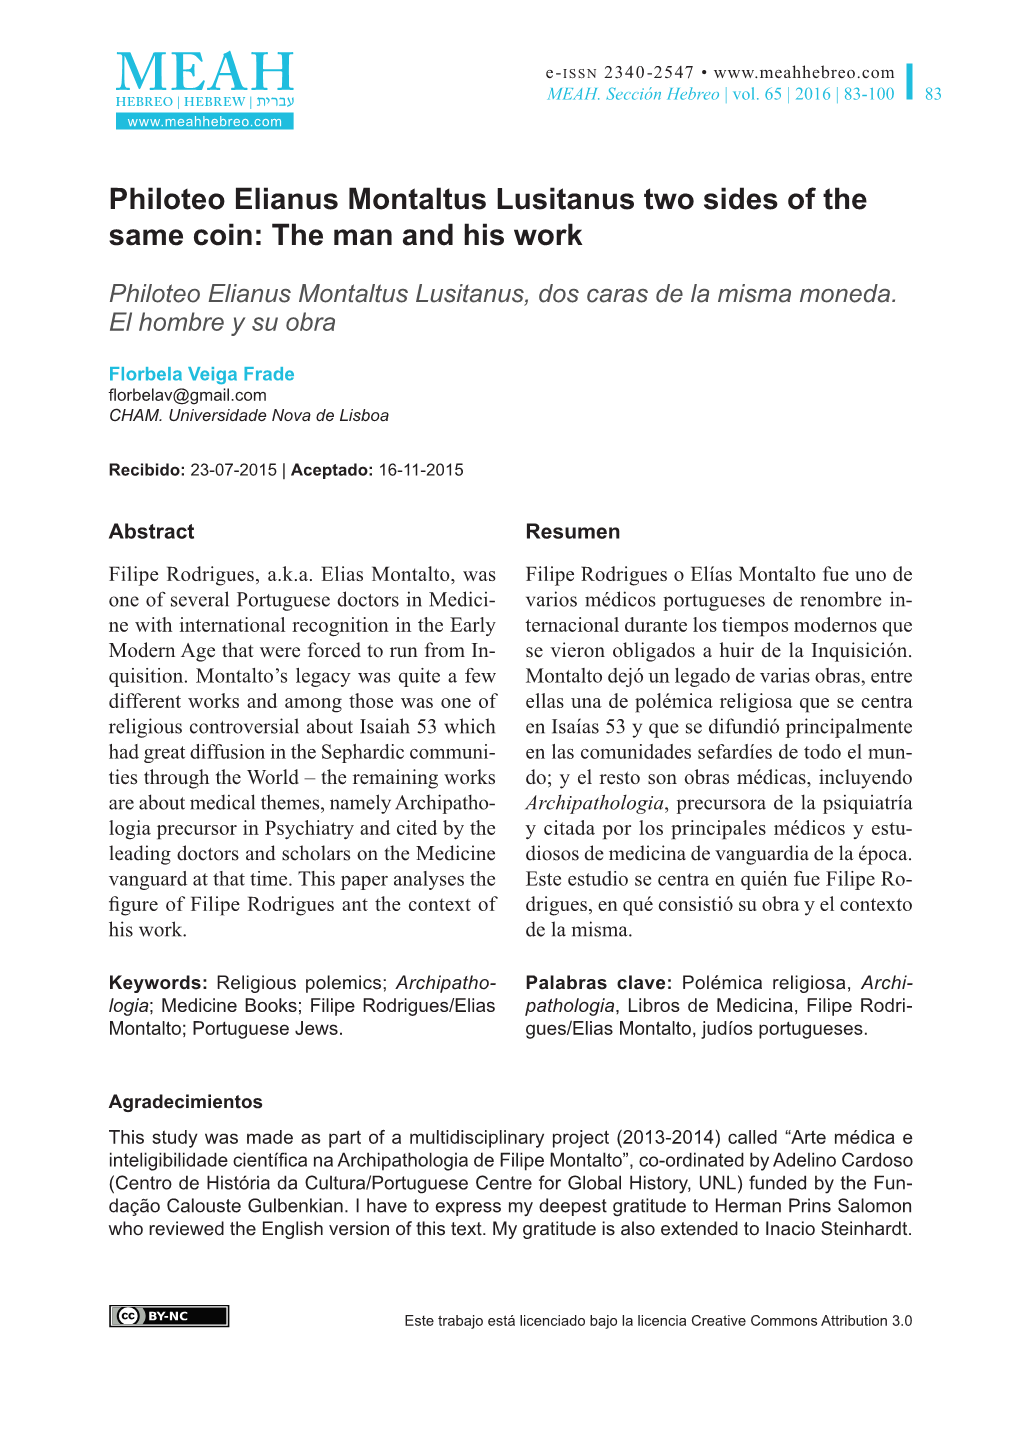 Philoteo Elianus Montaltus Lusitanus Two Sides of the Same Coin: the Man and His Work